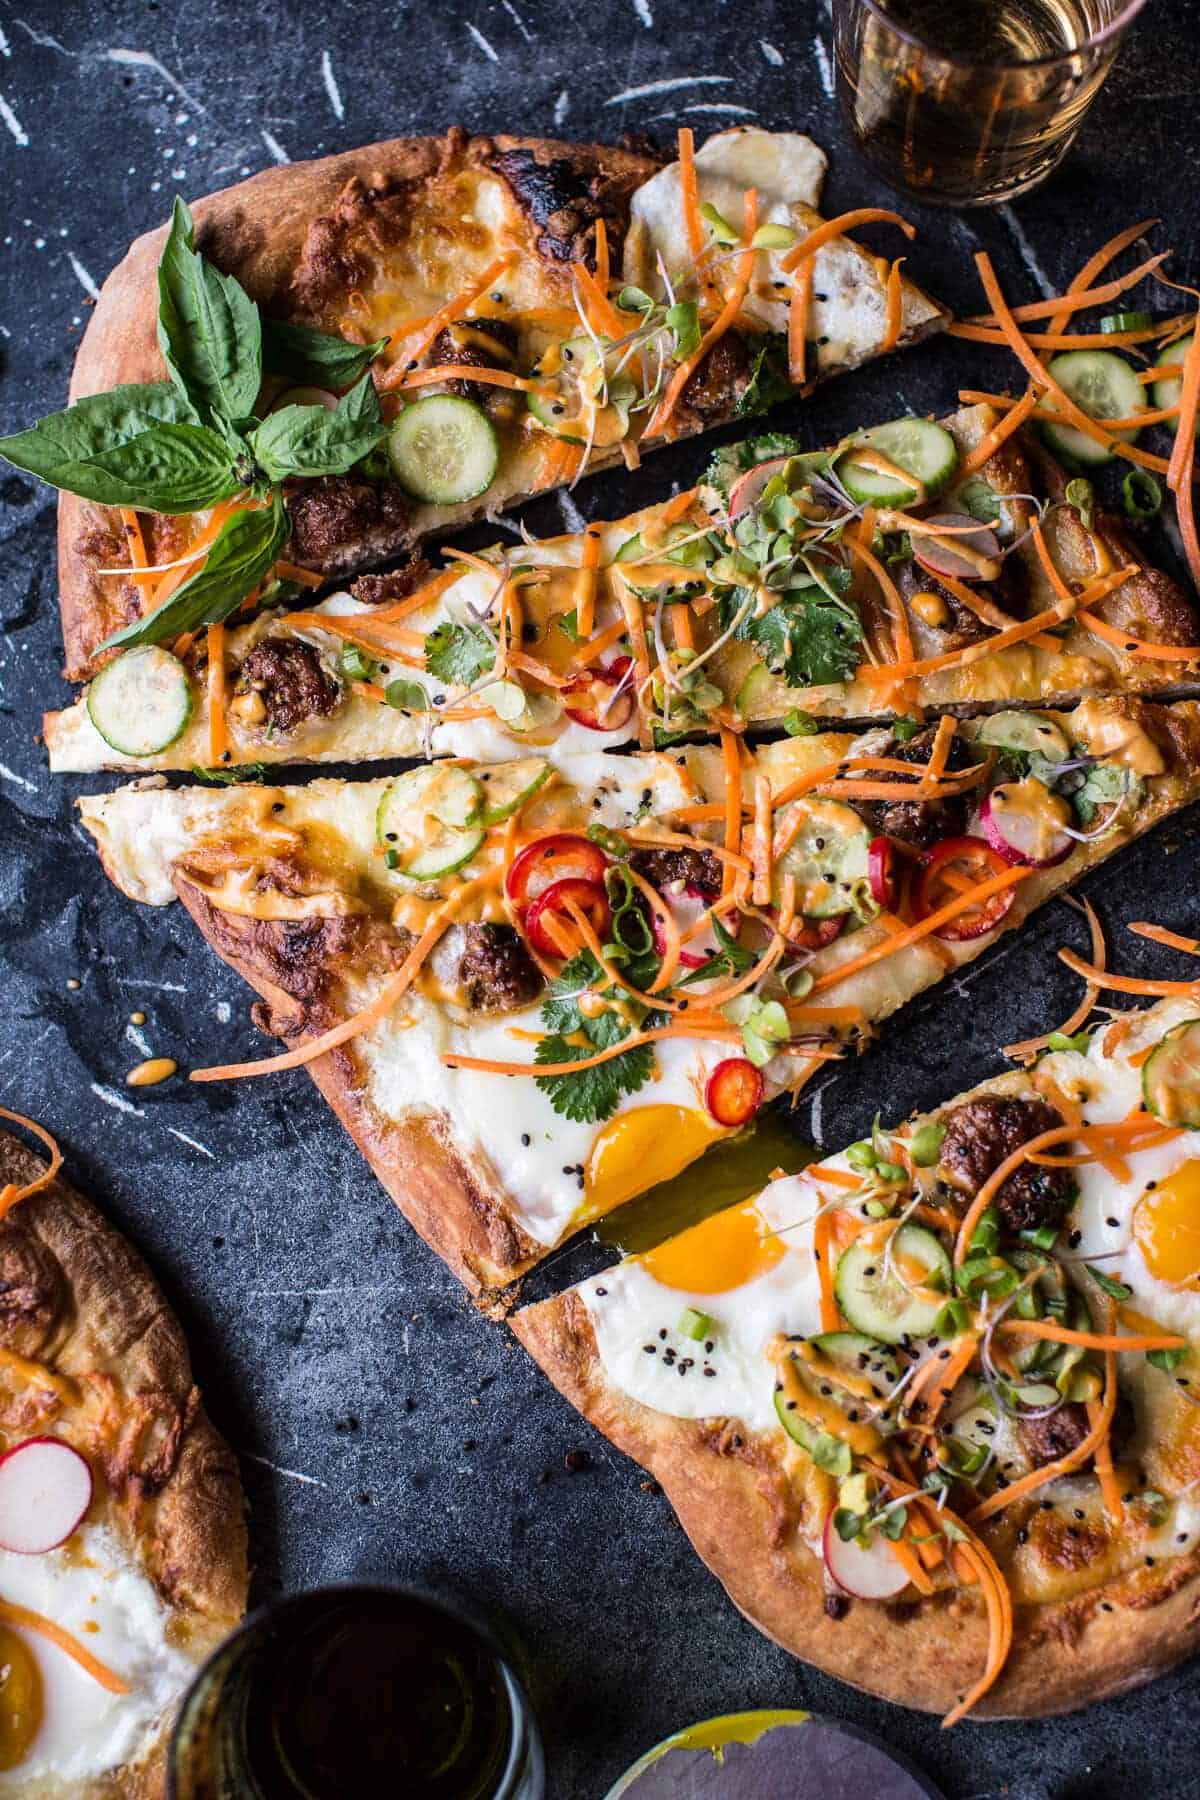 Banh Mi Pizza | halfbakedharvest.com @hbharvest